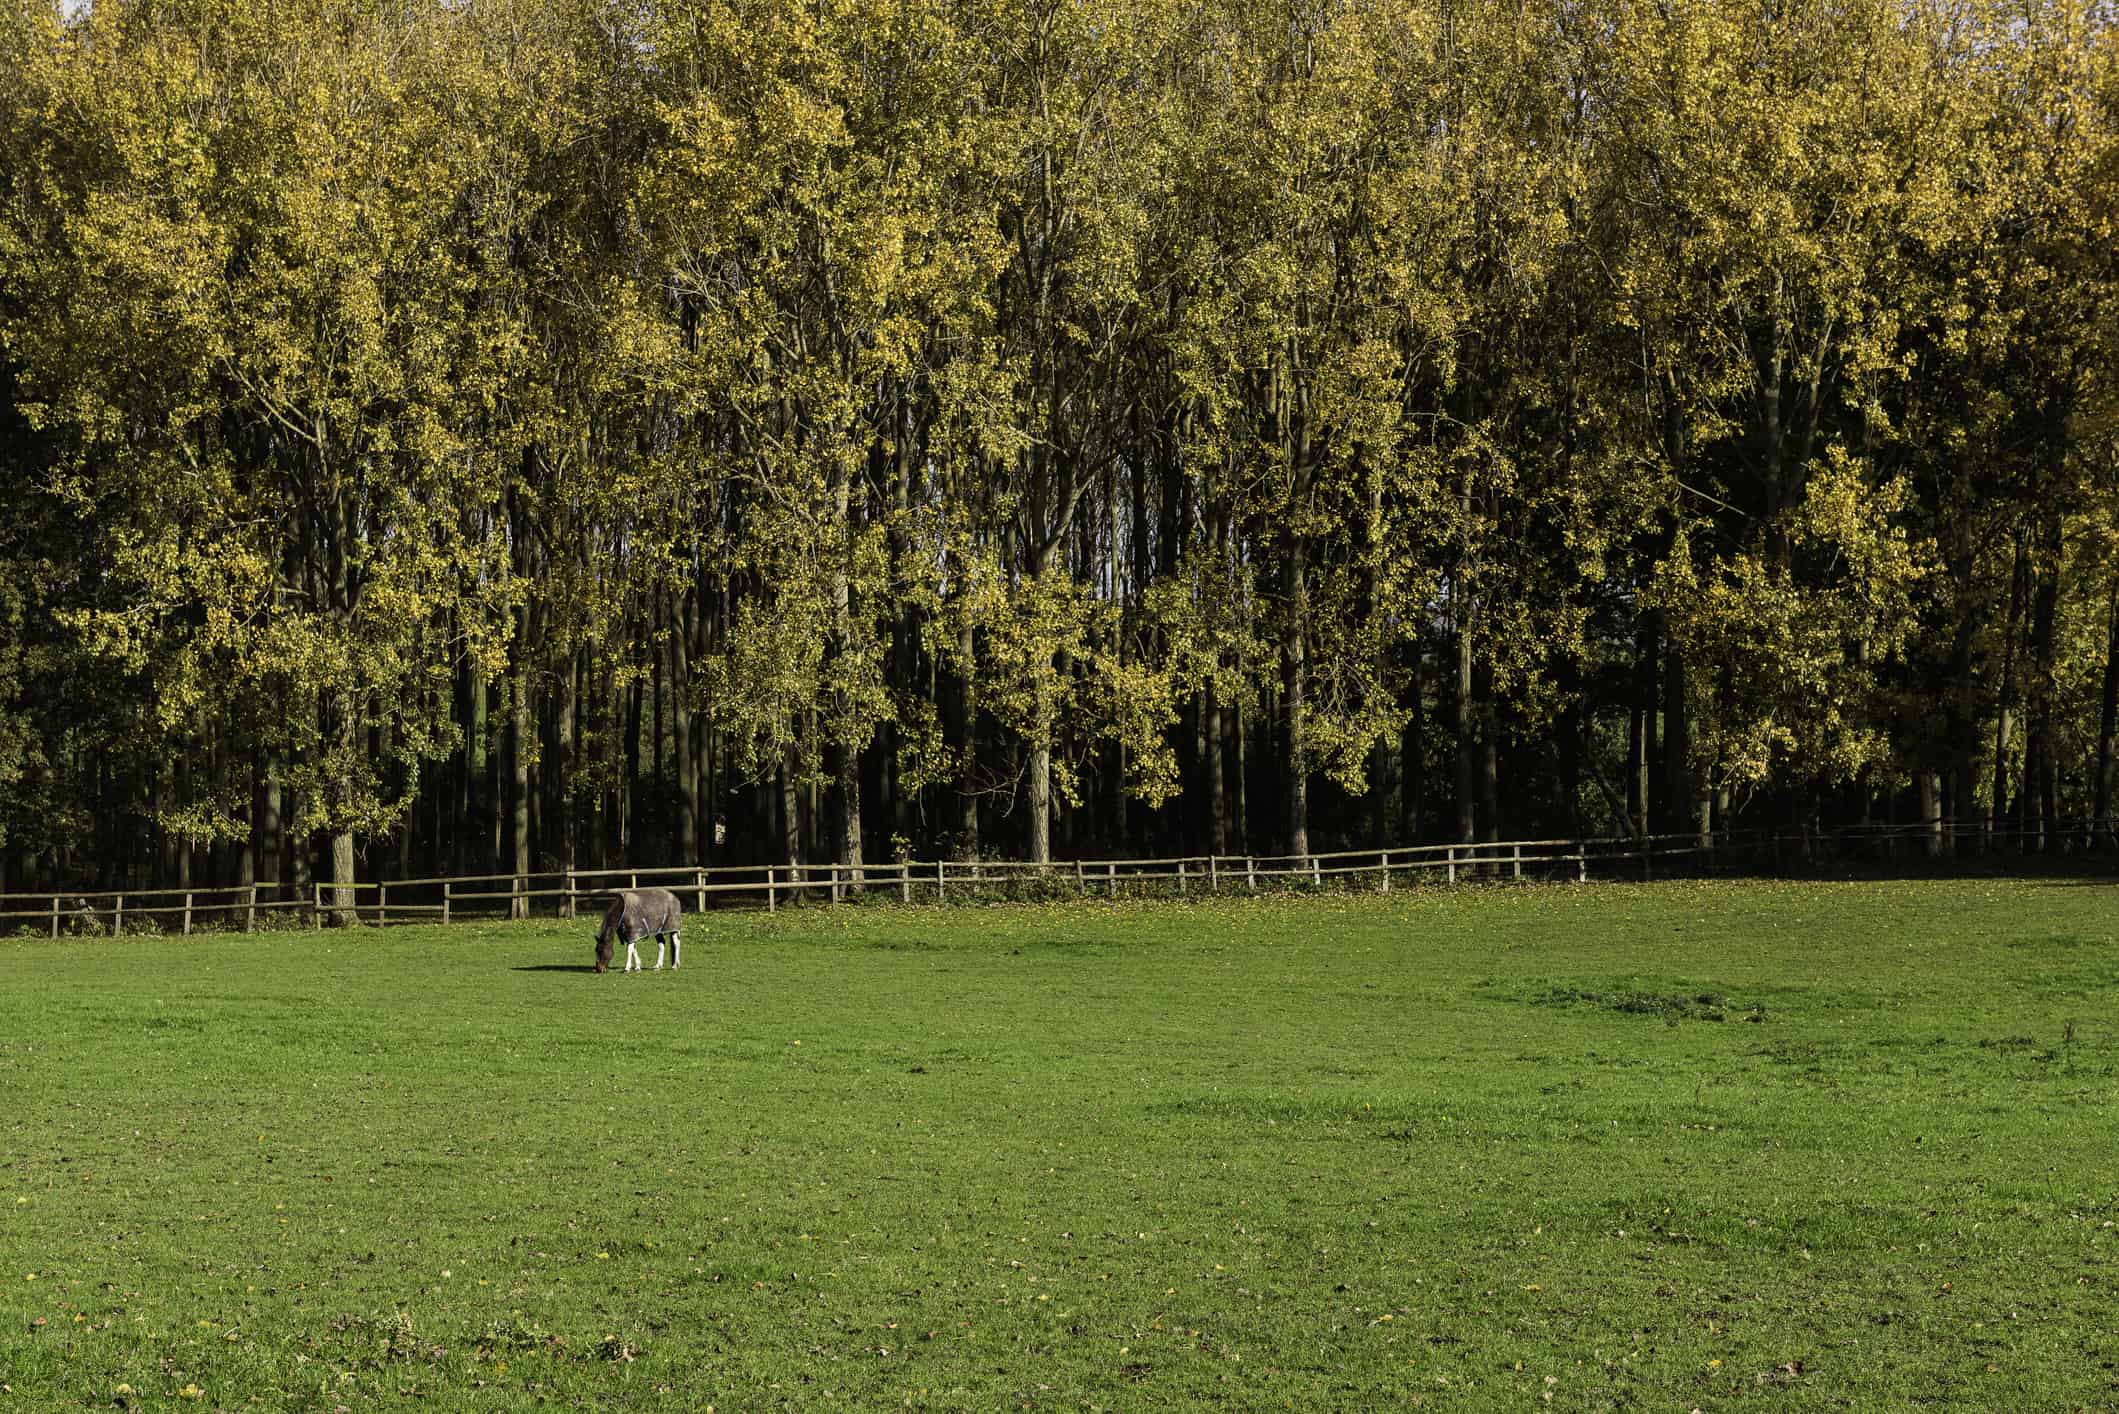 A horse in a field just outside Pluckley near Ashford in Kent